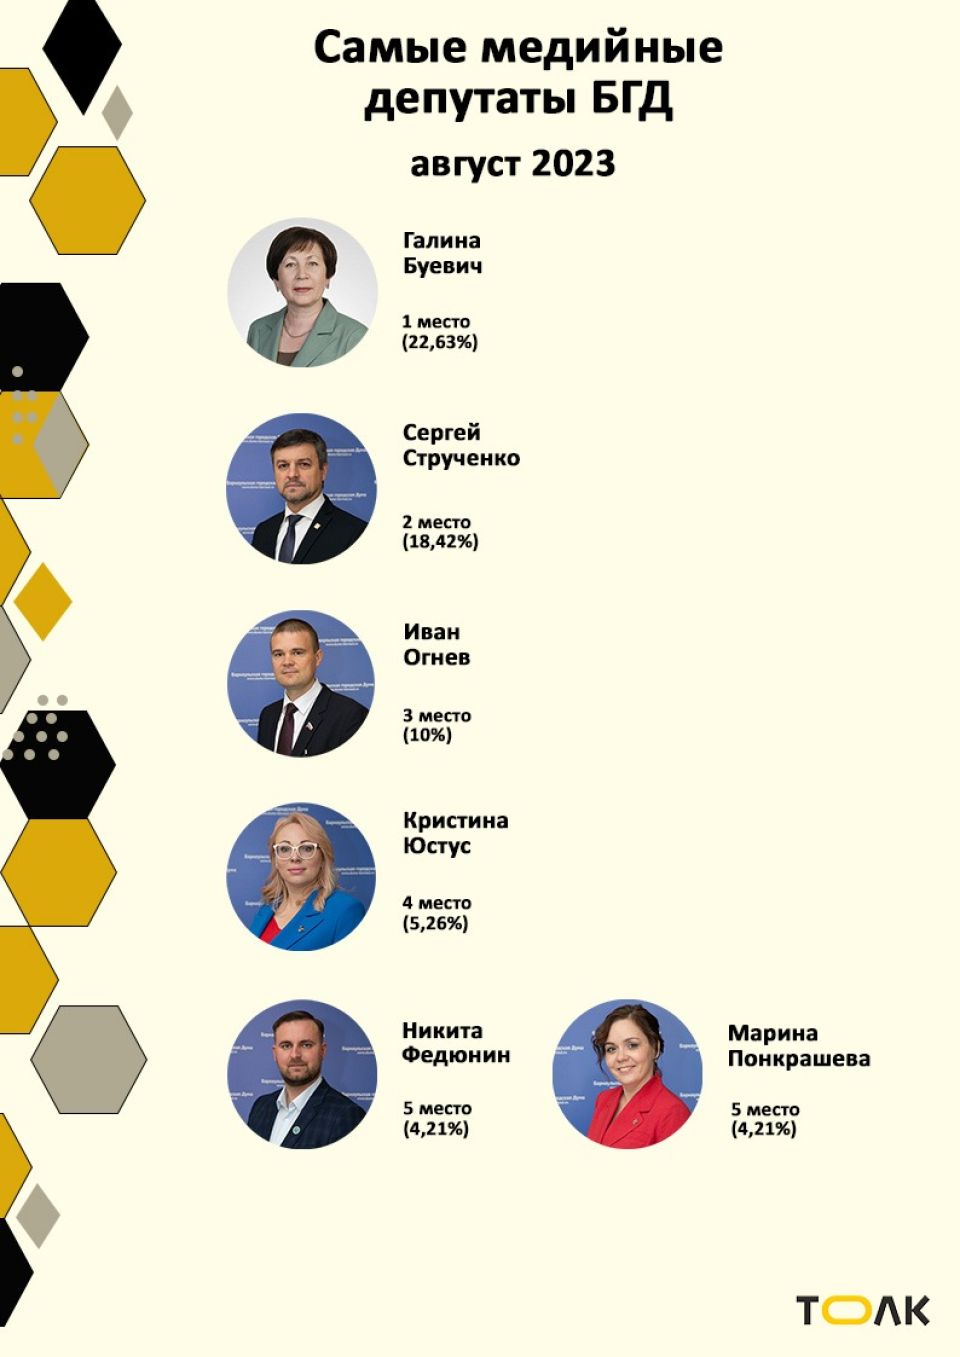 Рейтинг медийности депутатов БГД, август 2023 года